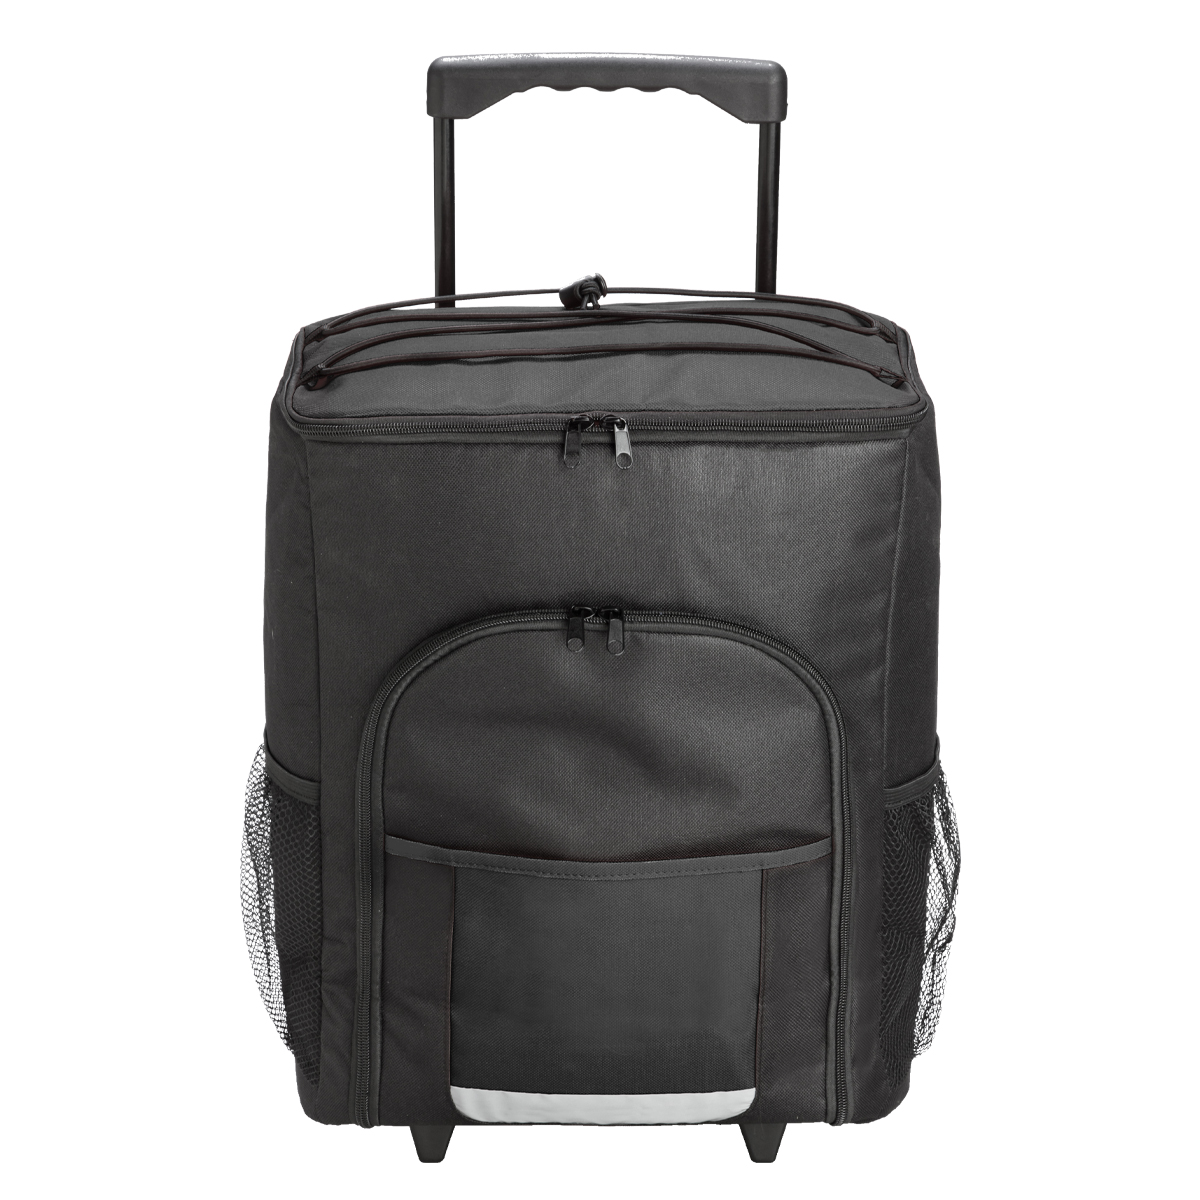 Liyen Trolley Backpack Cooler Product Image